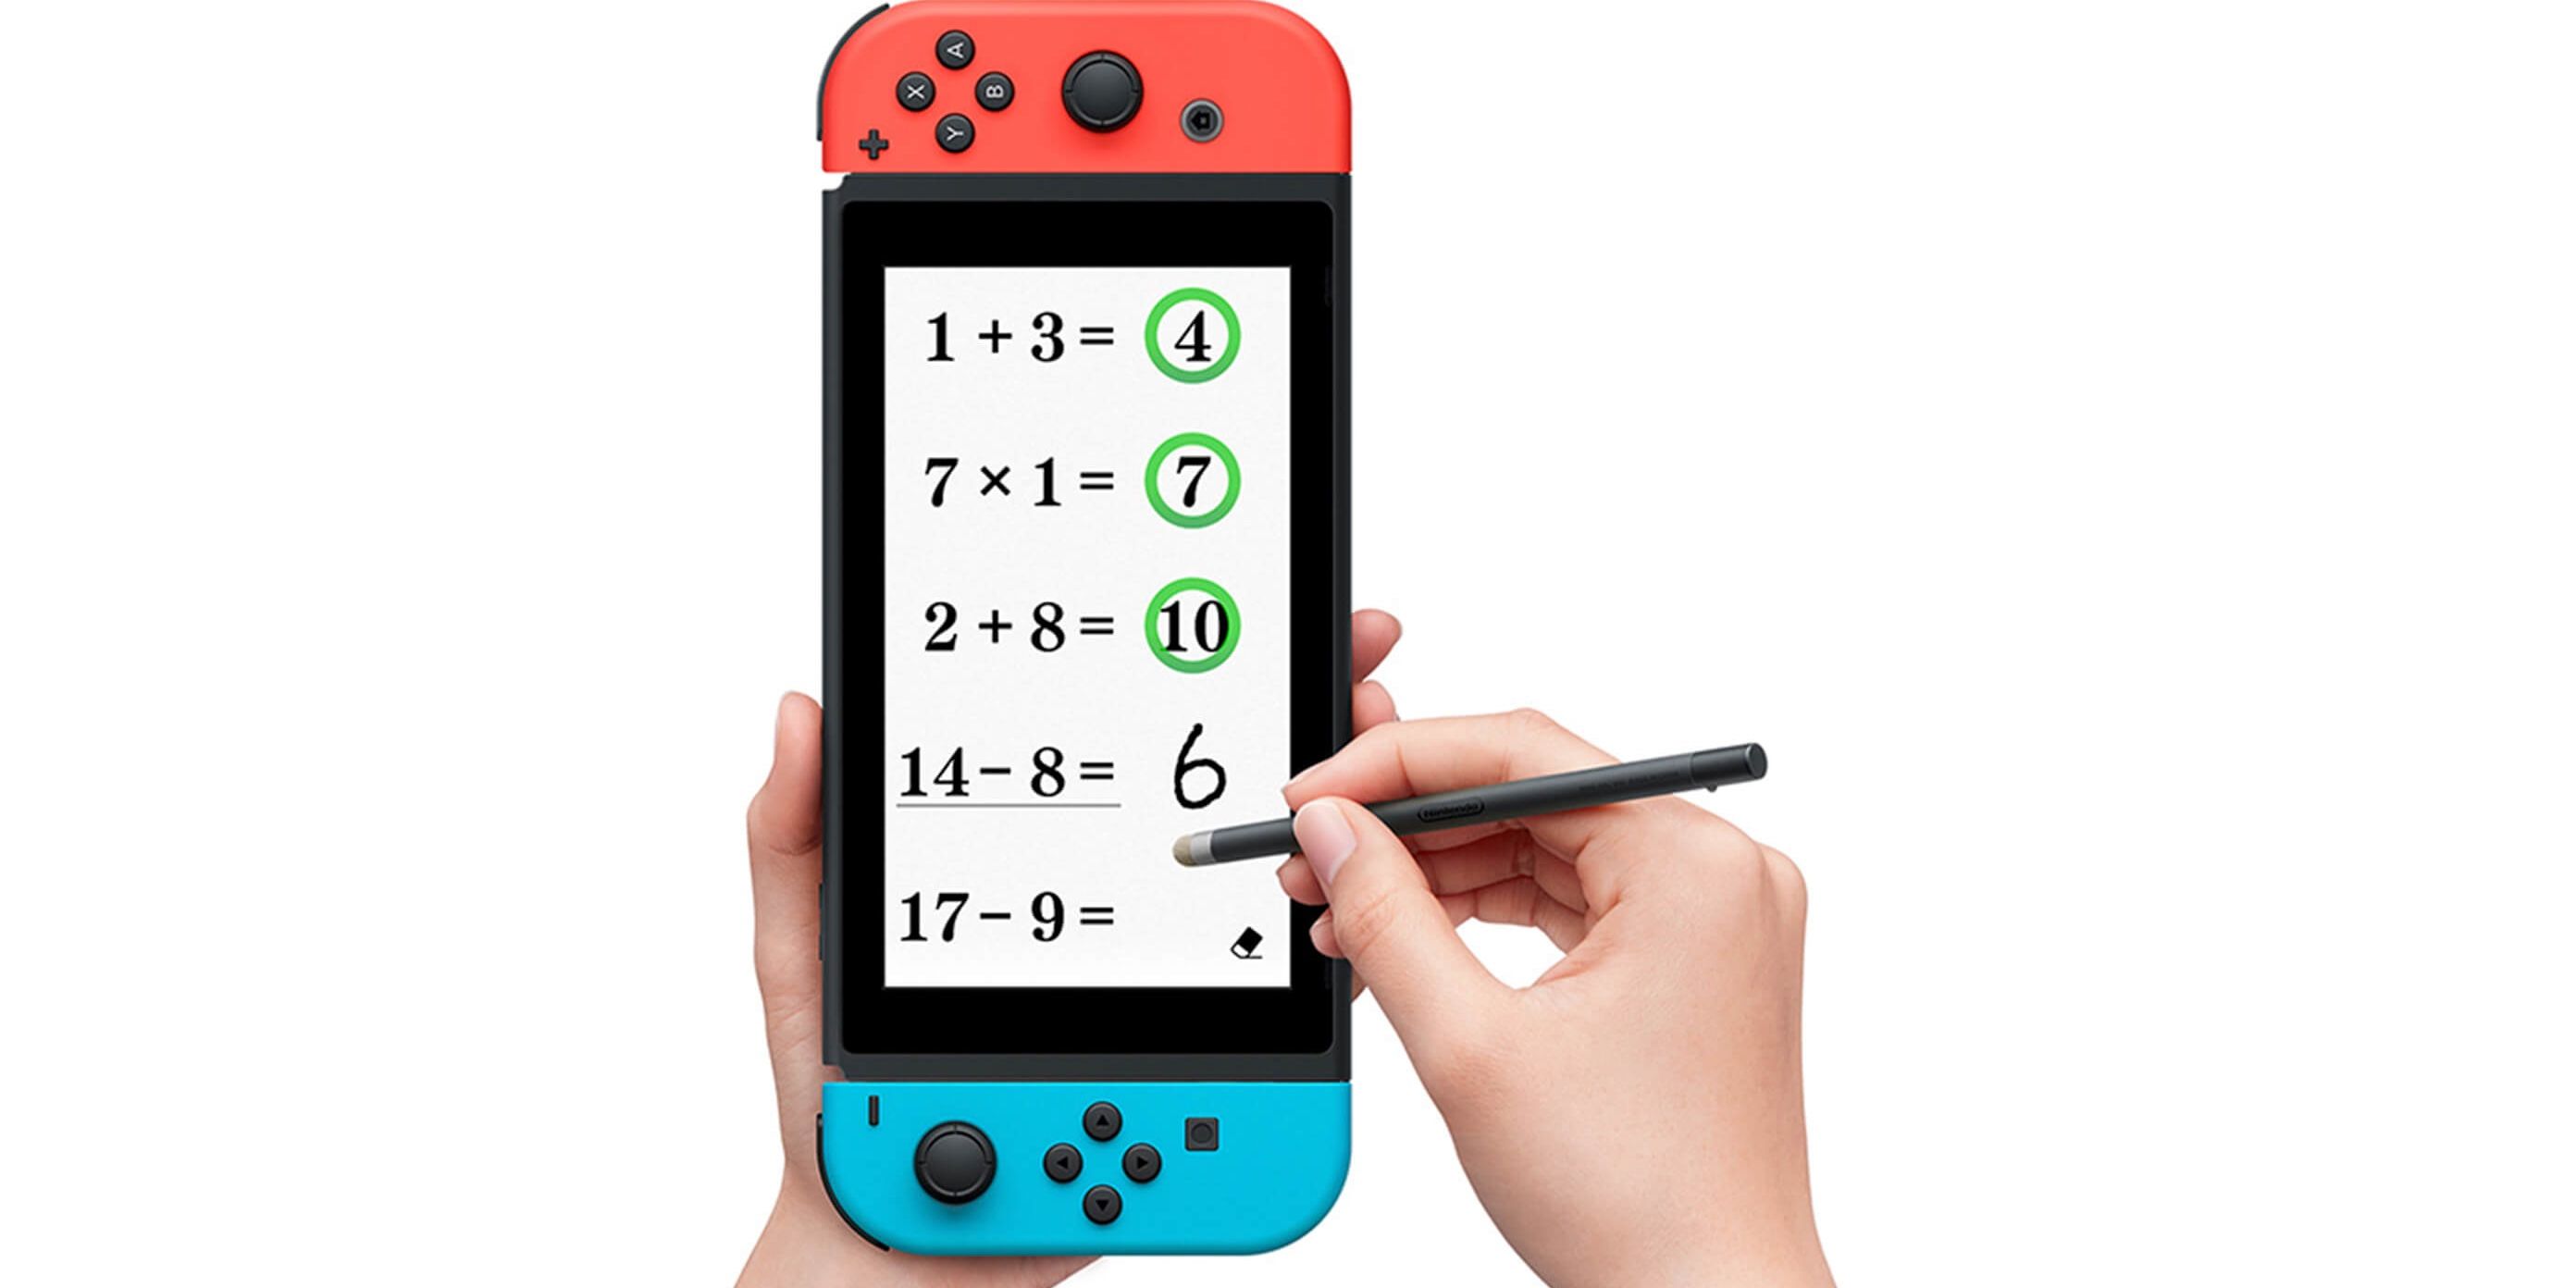 Nintendo Switch Touch Controls Stylus Brain Age Math